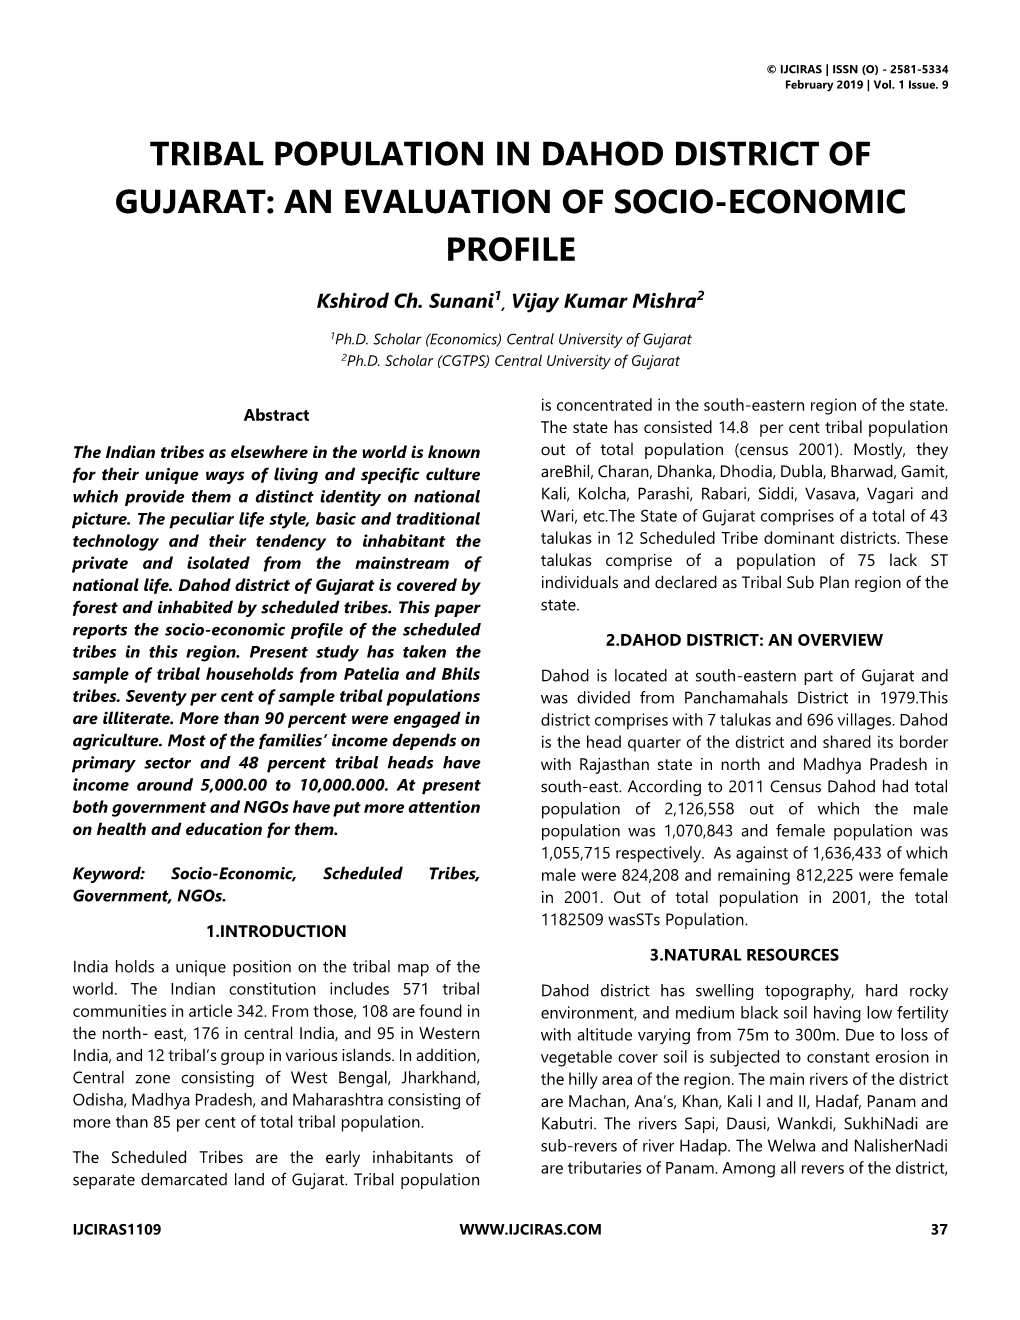 Tribal Population in Dahod District of Gujarat: an Evaluation of Socio-Economic Profile